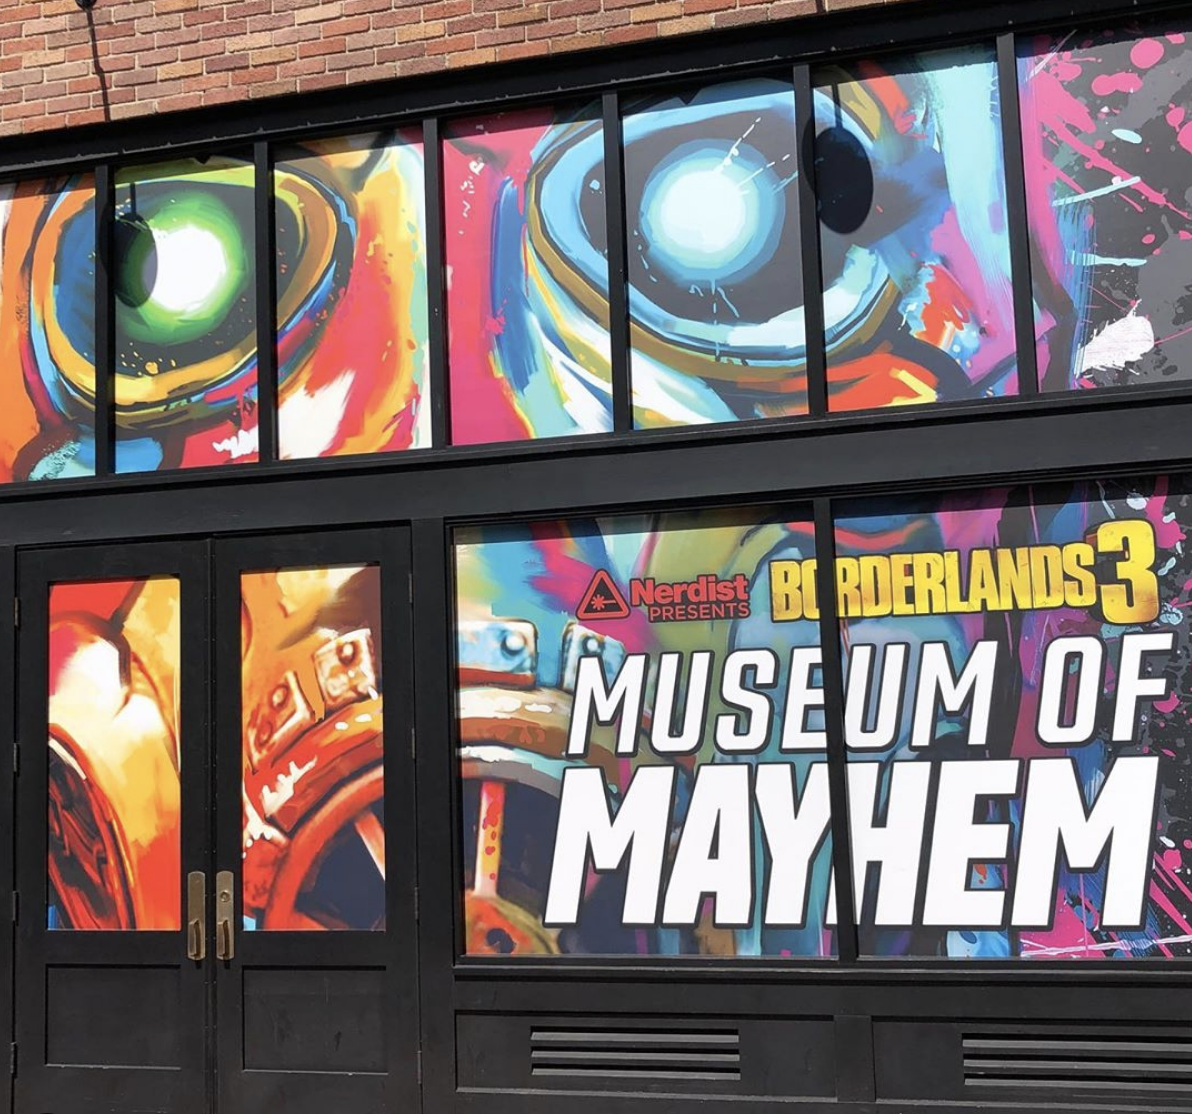 Nerdist Presents the Borderlands Museum of Mayhem